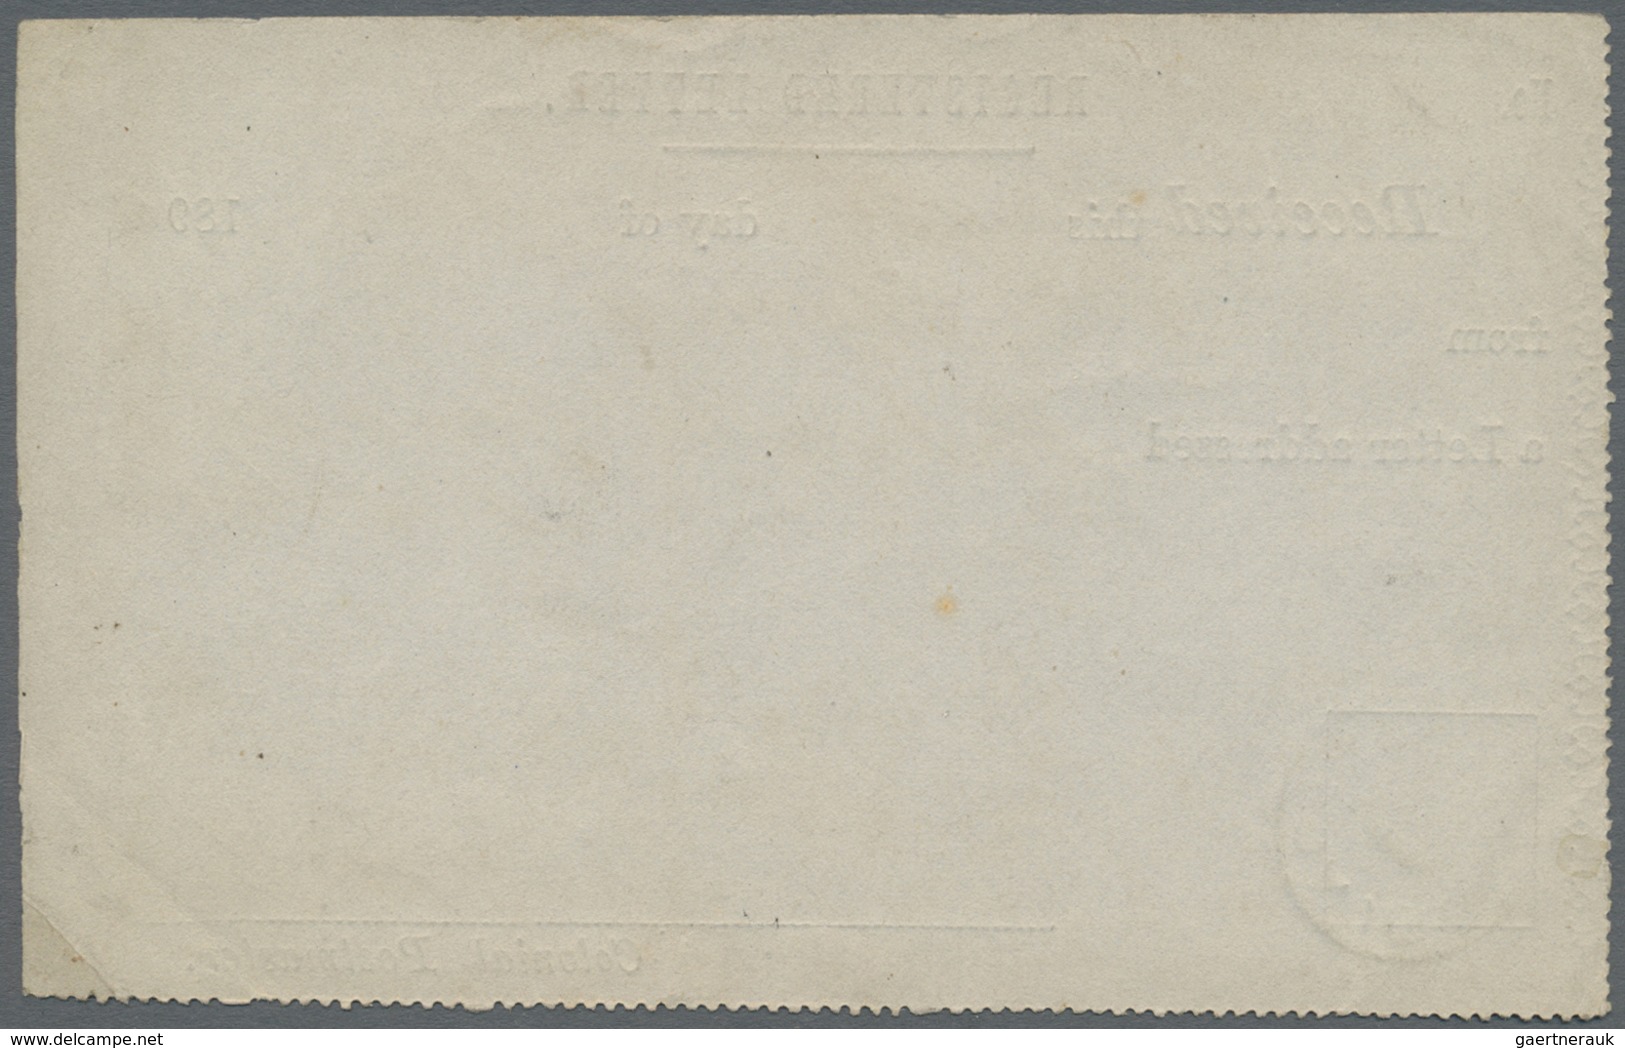 Br Grenada: 1890. Receipt Form For Registered Letter Cancelled By 'Grenada/D' (16/12) Date Stamp In Blu - Grenade (...-1974)